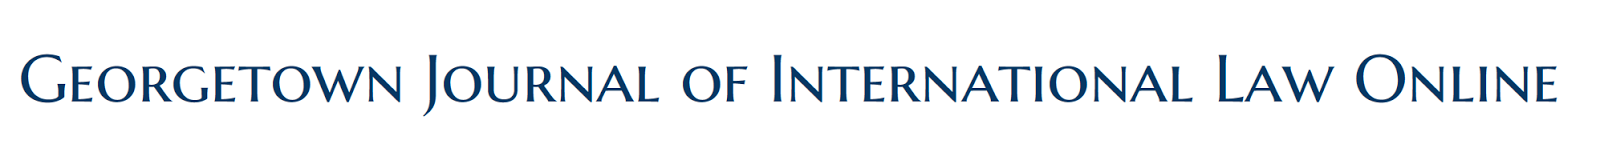 Georgetown Journal of International Law Online